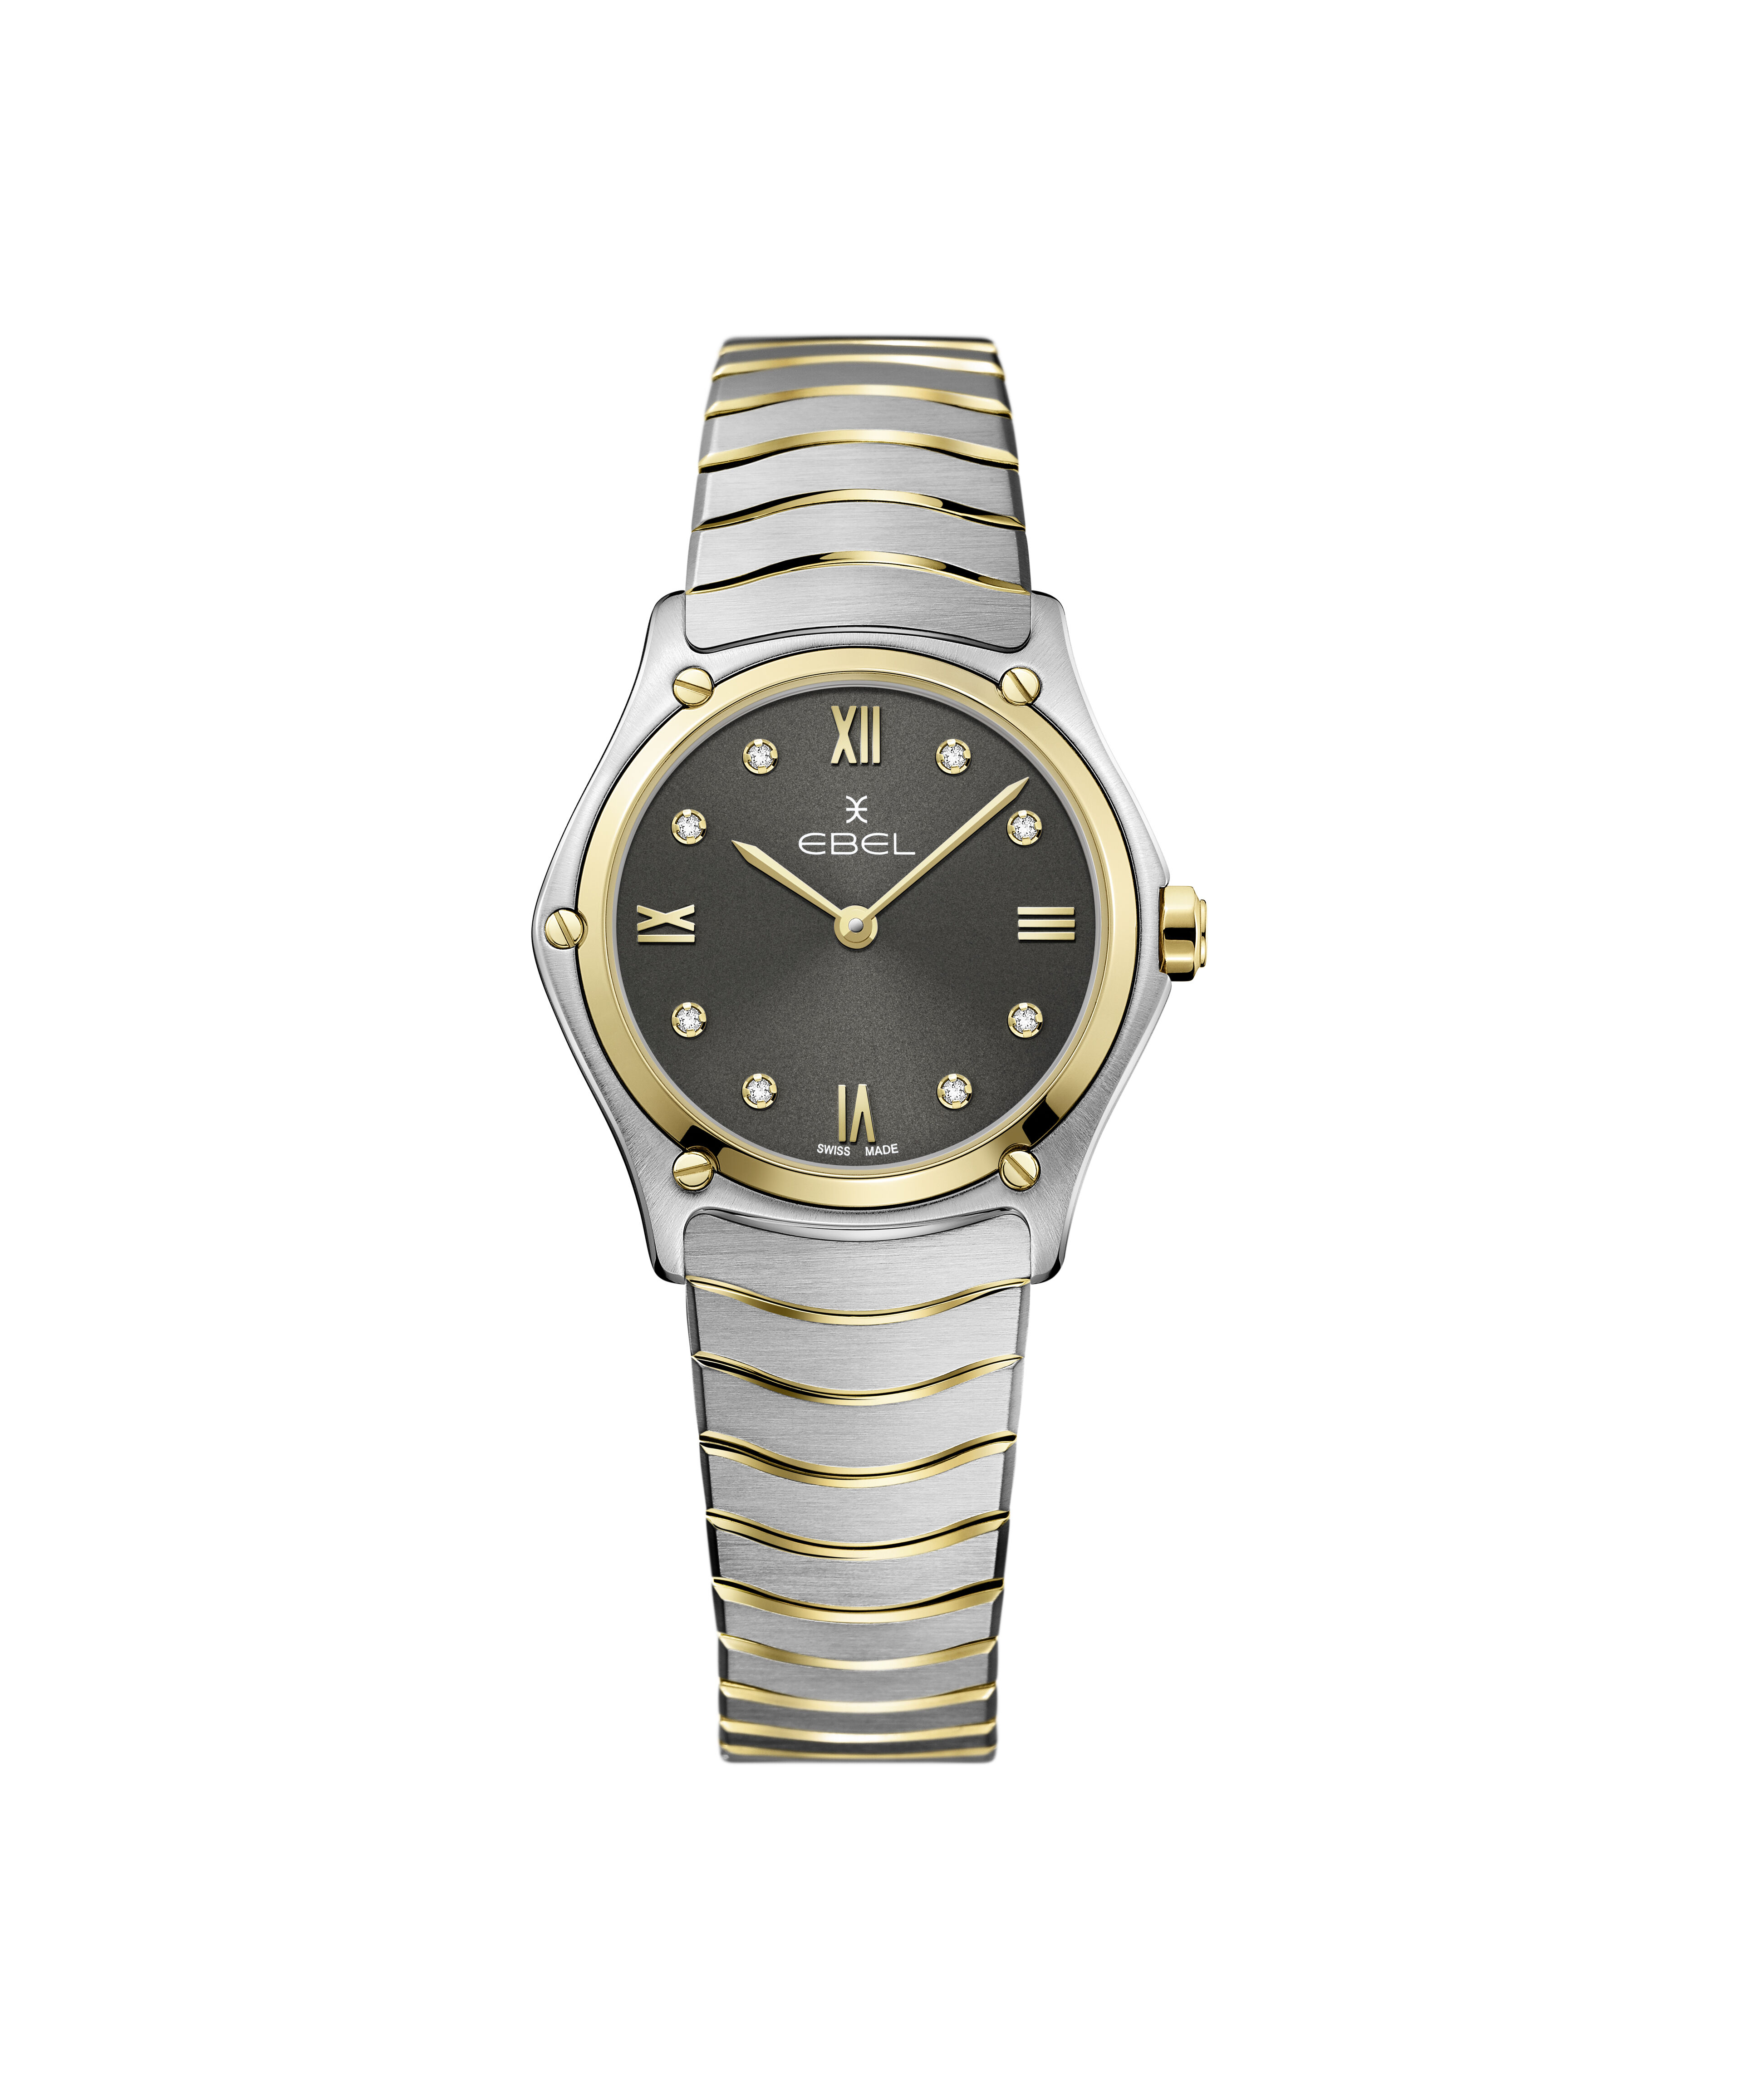 Rolex Swiss Replica Watches Information